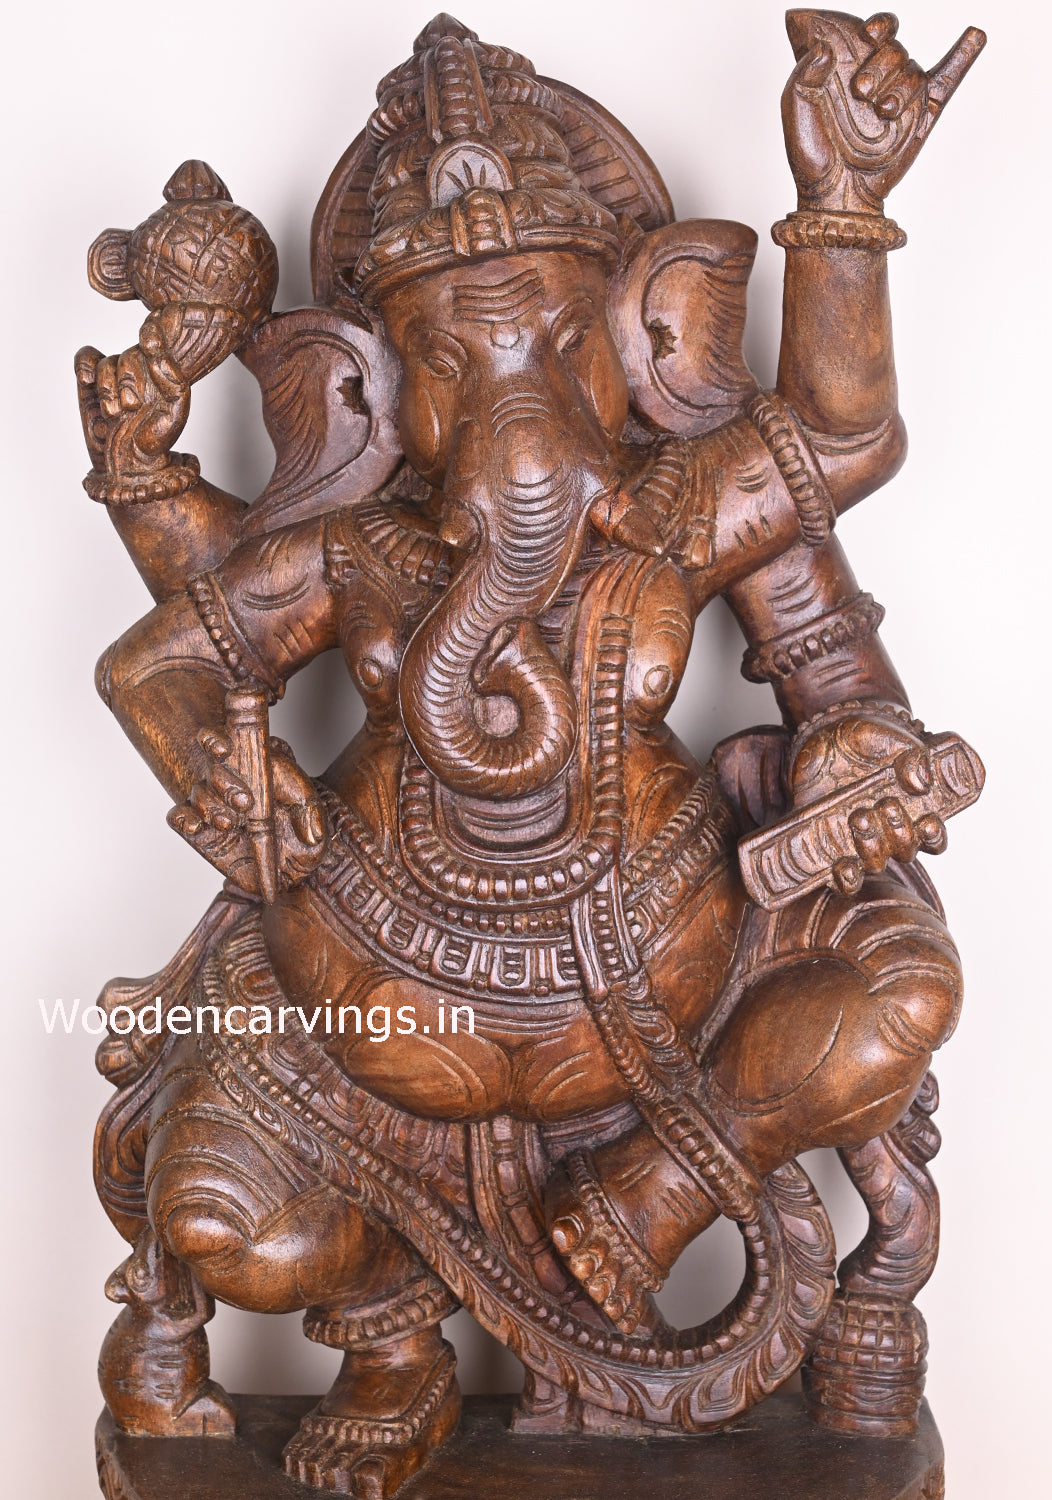 Dancing Lord Ganesha Holding Books, Writing nail, and Sweet Mothak Wooden Handmade Sculpture 35"